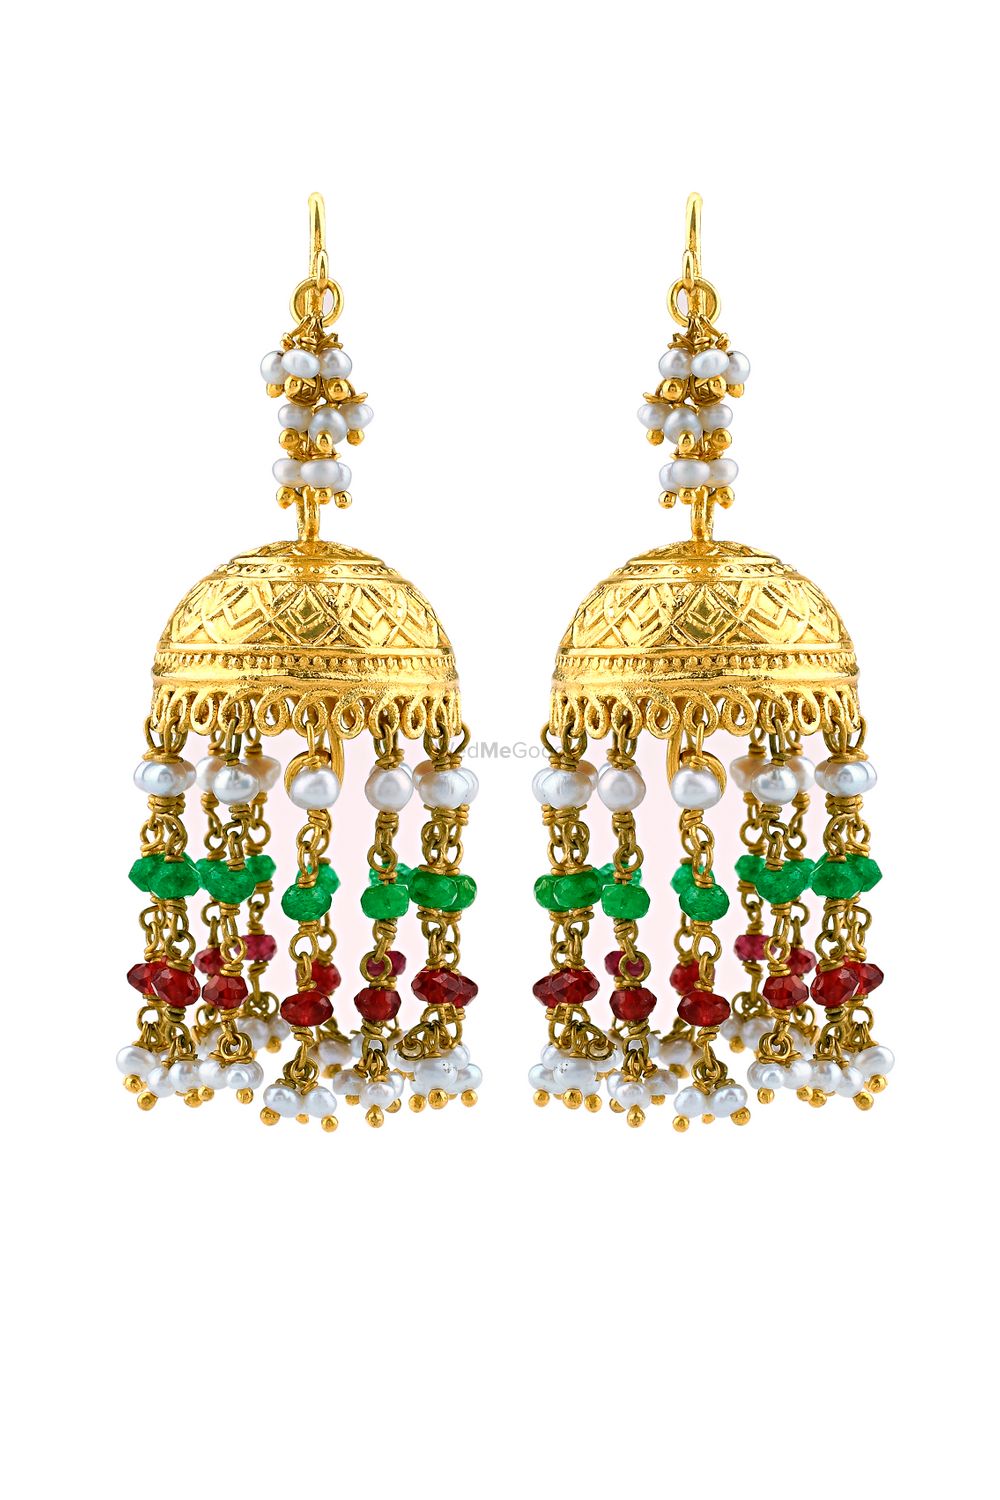 Photo of gold jhumki earrings